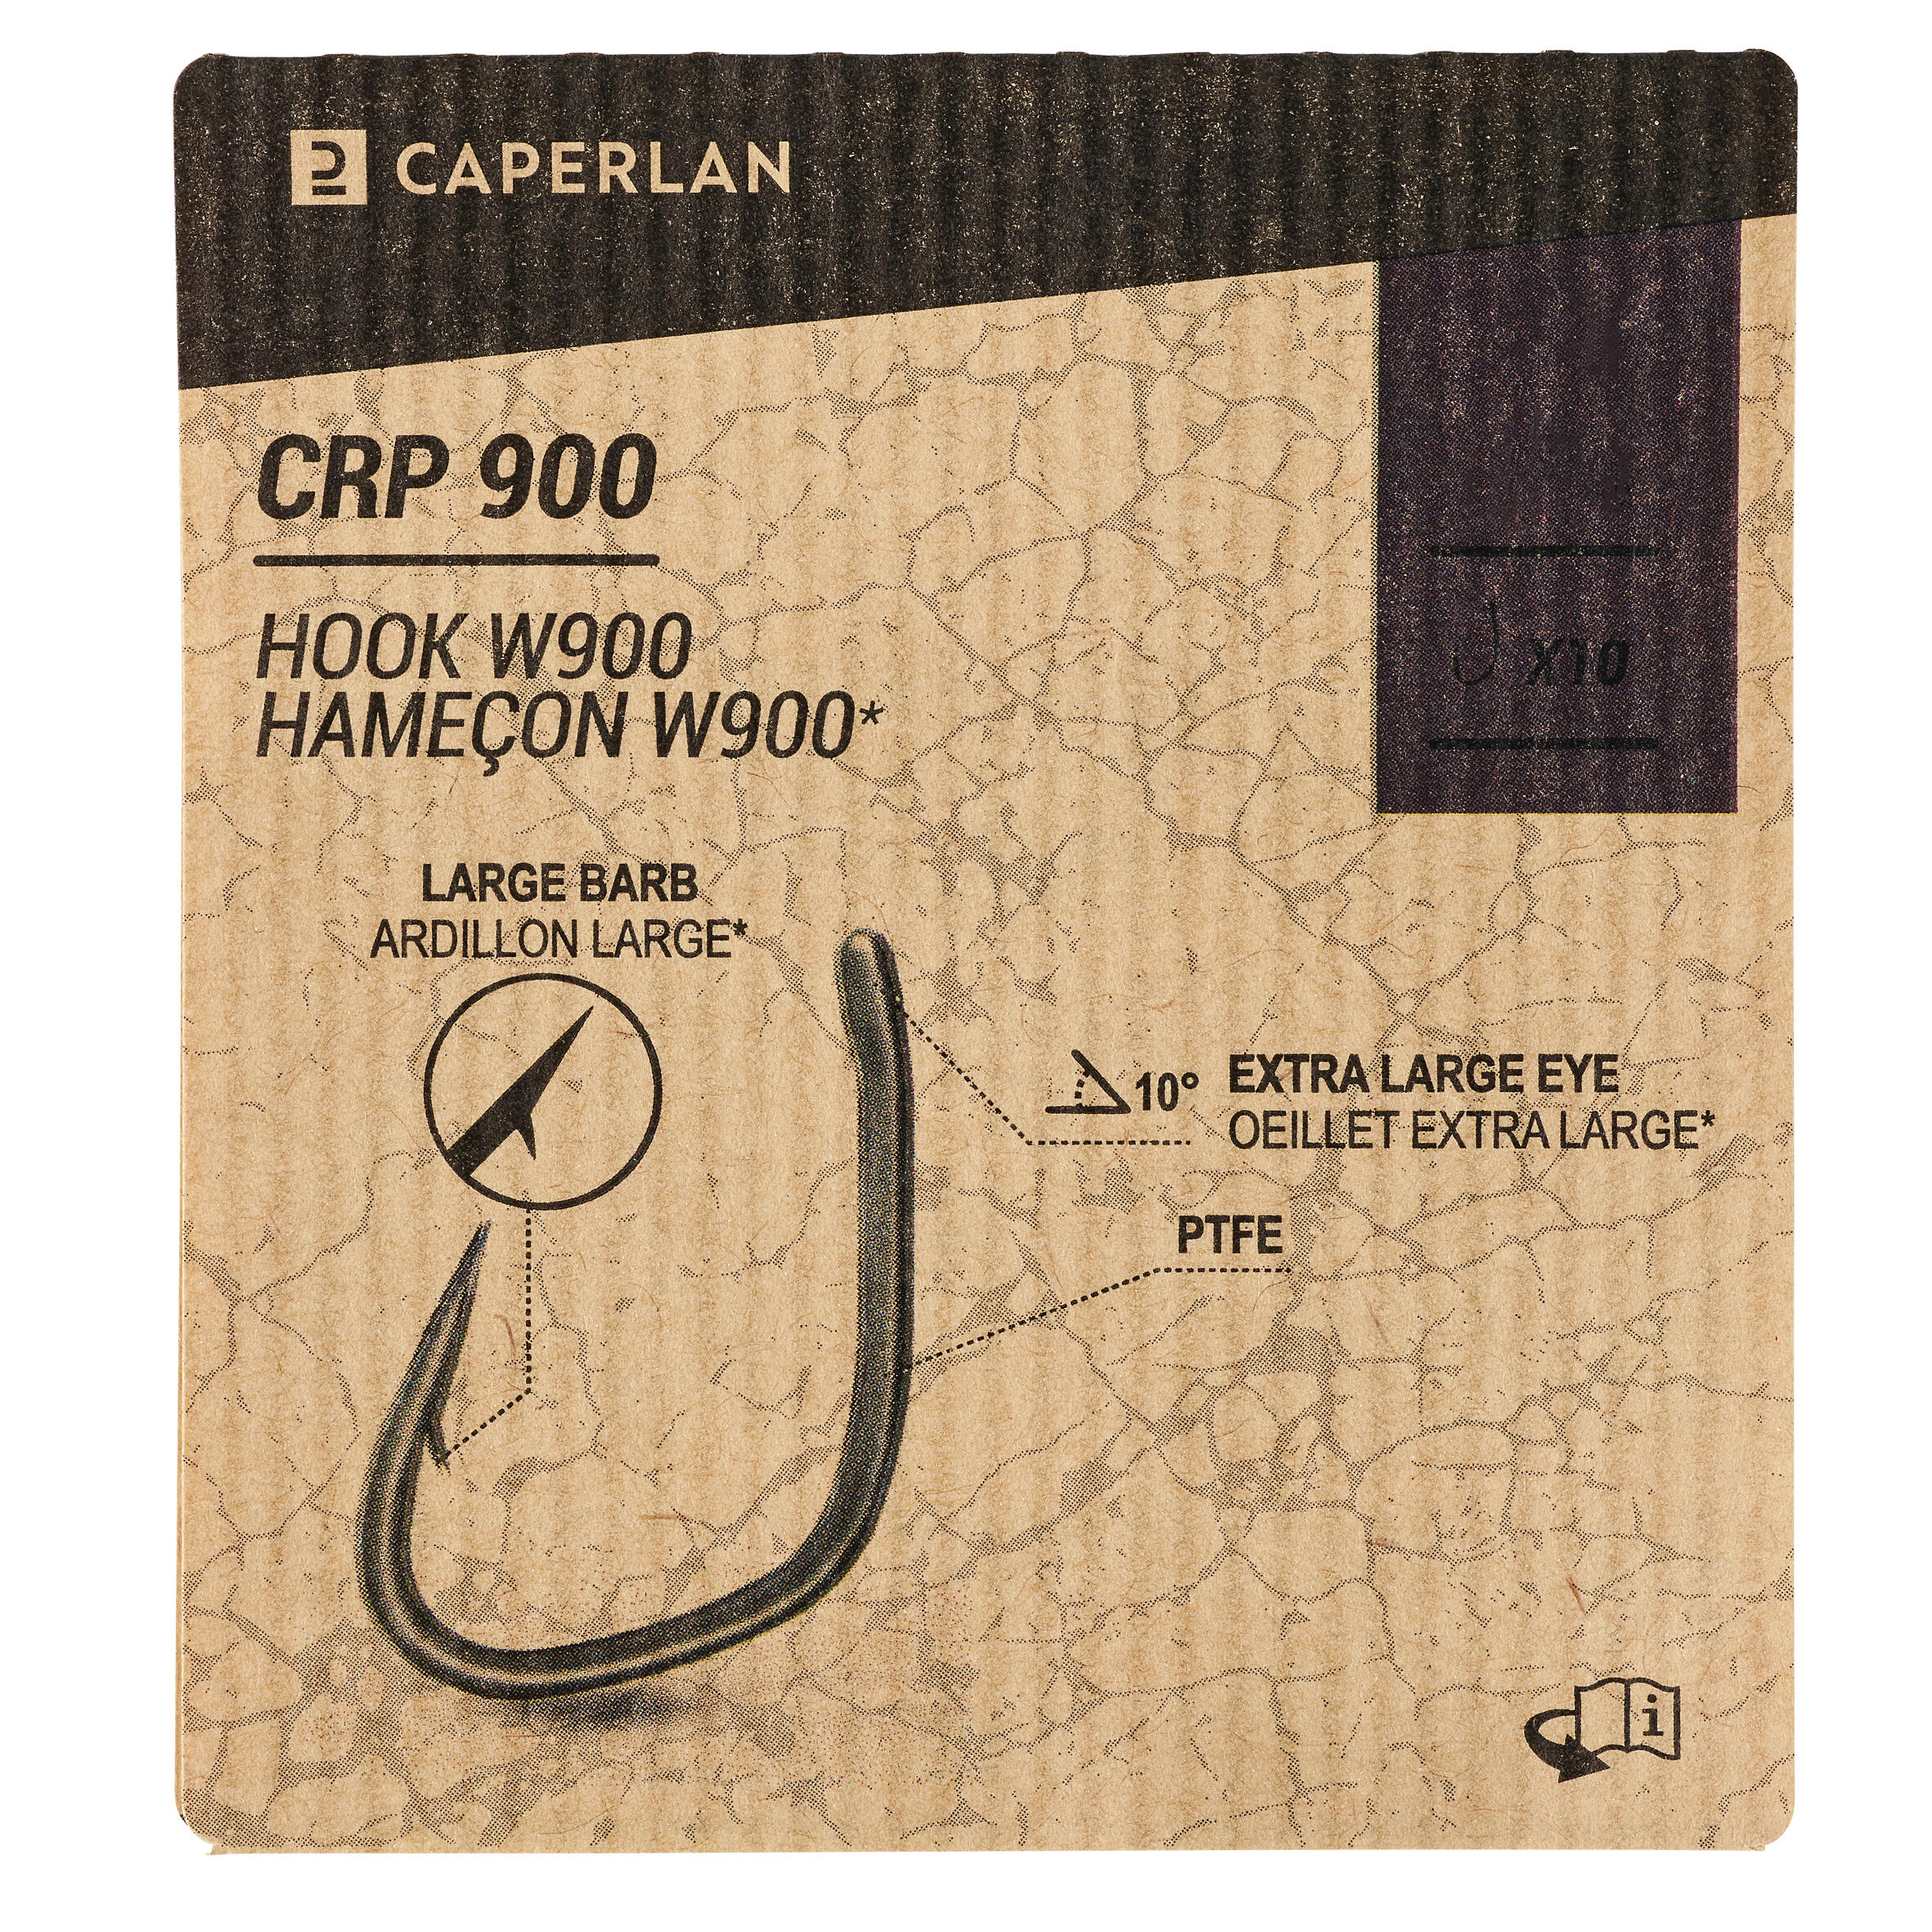 Carp fishing hook - 900 Wild X 3/4